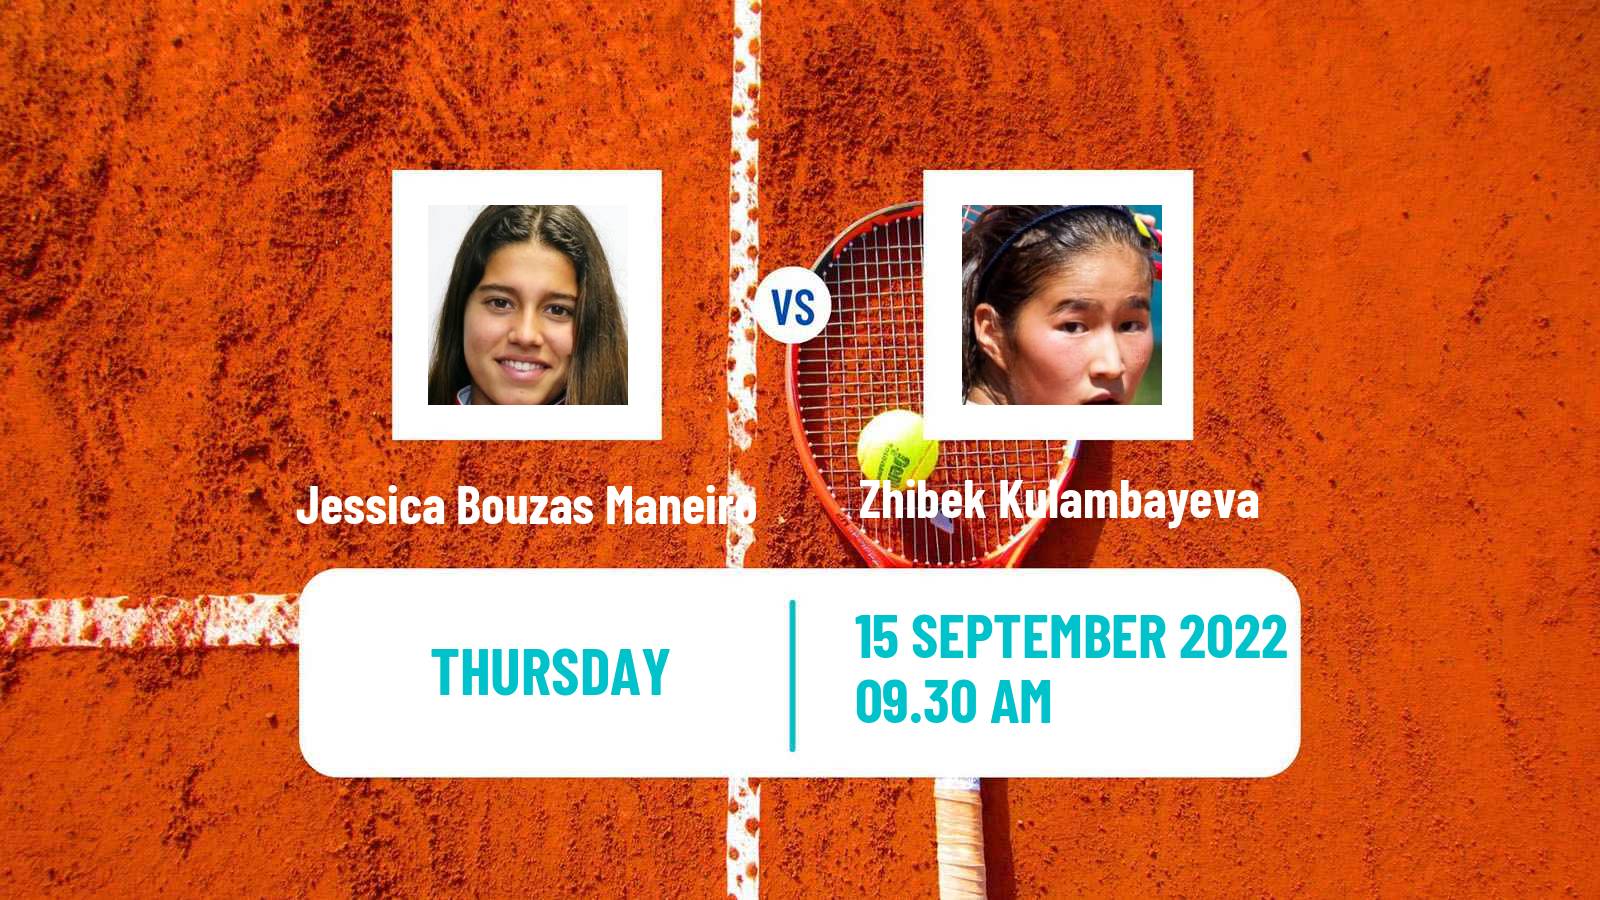 Tennis ITF Tournaments Jessica Bouzas Maneiro - Zhibek Kulambayeva